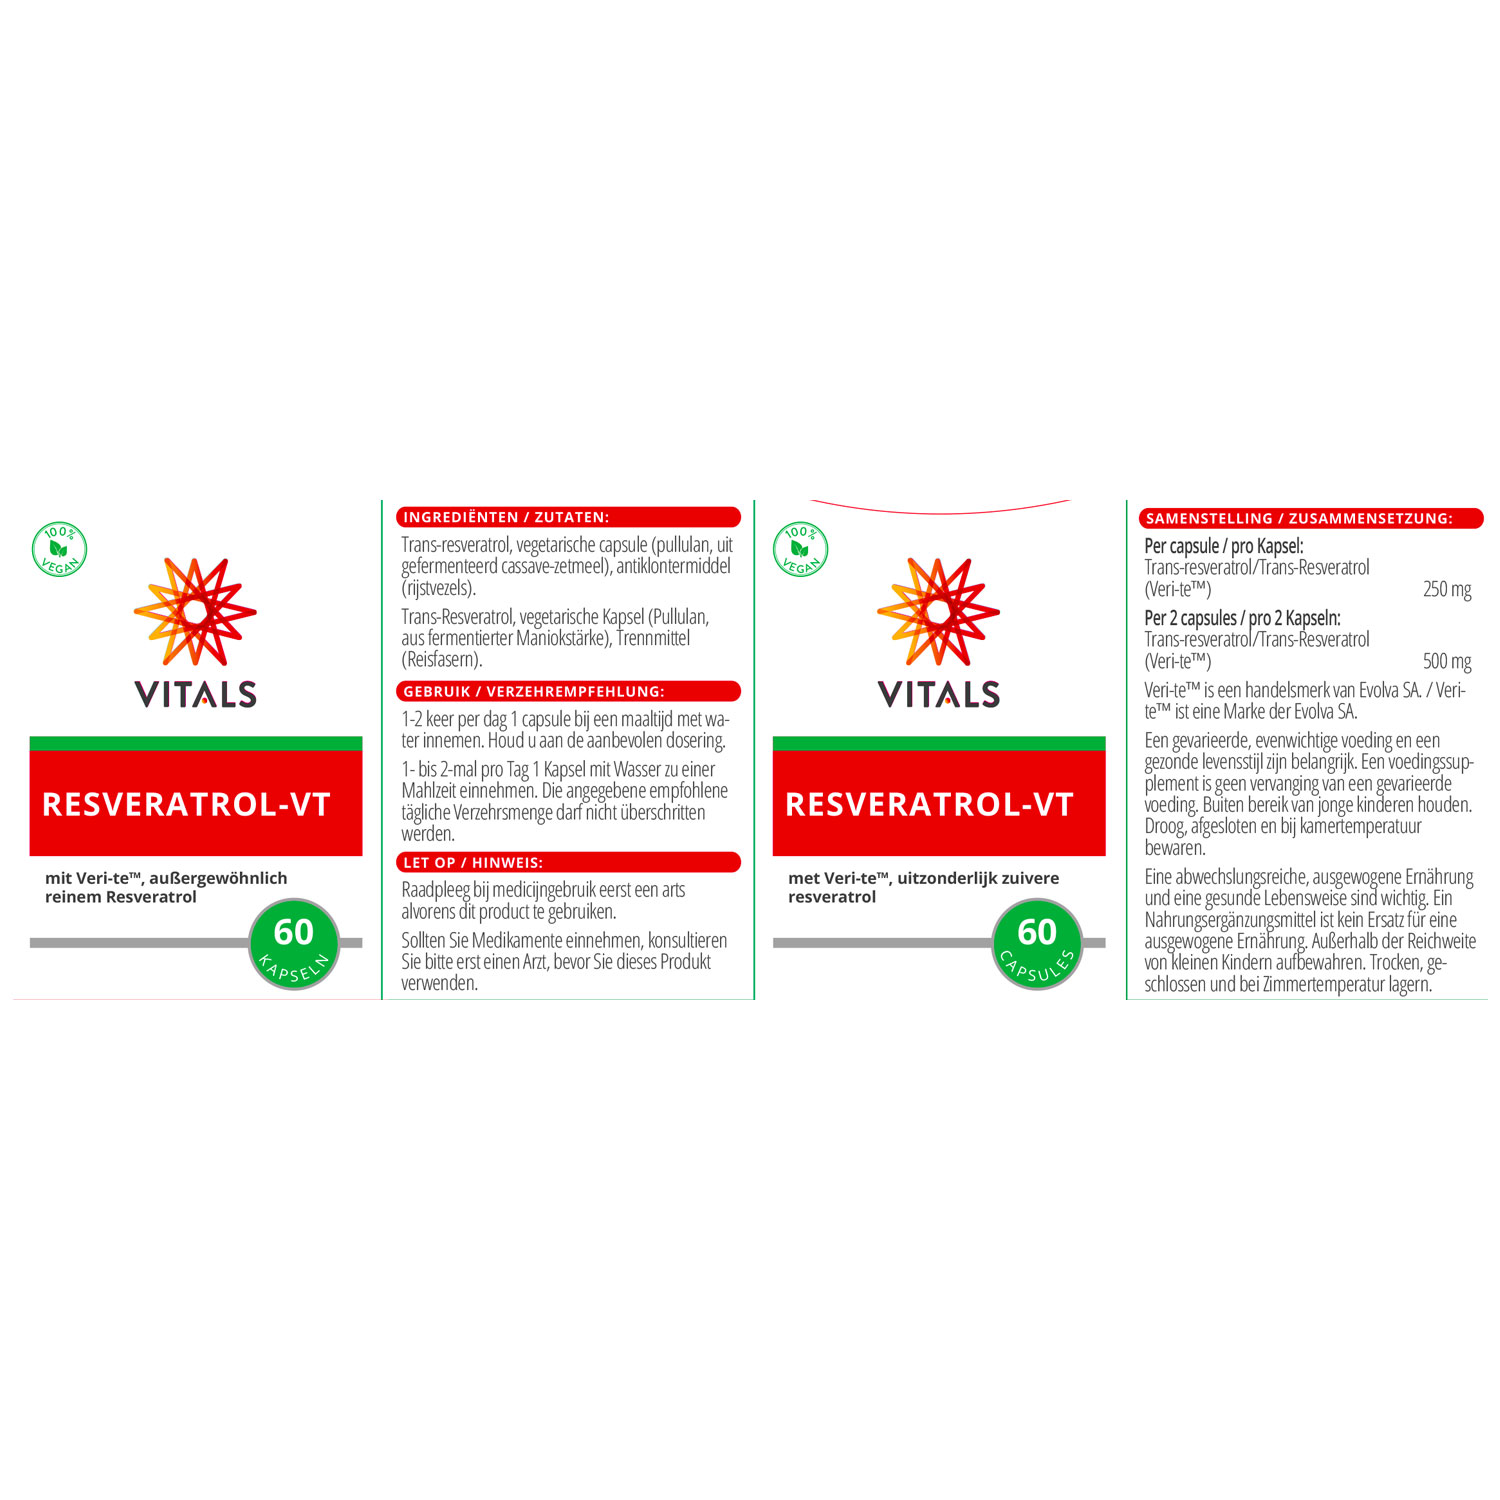 Resveratrol-VT von Vitals - Etikett